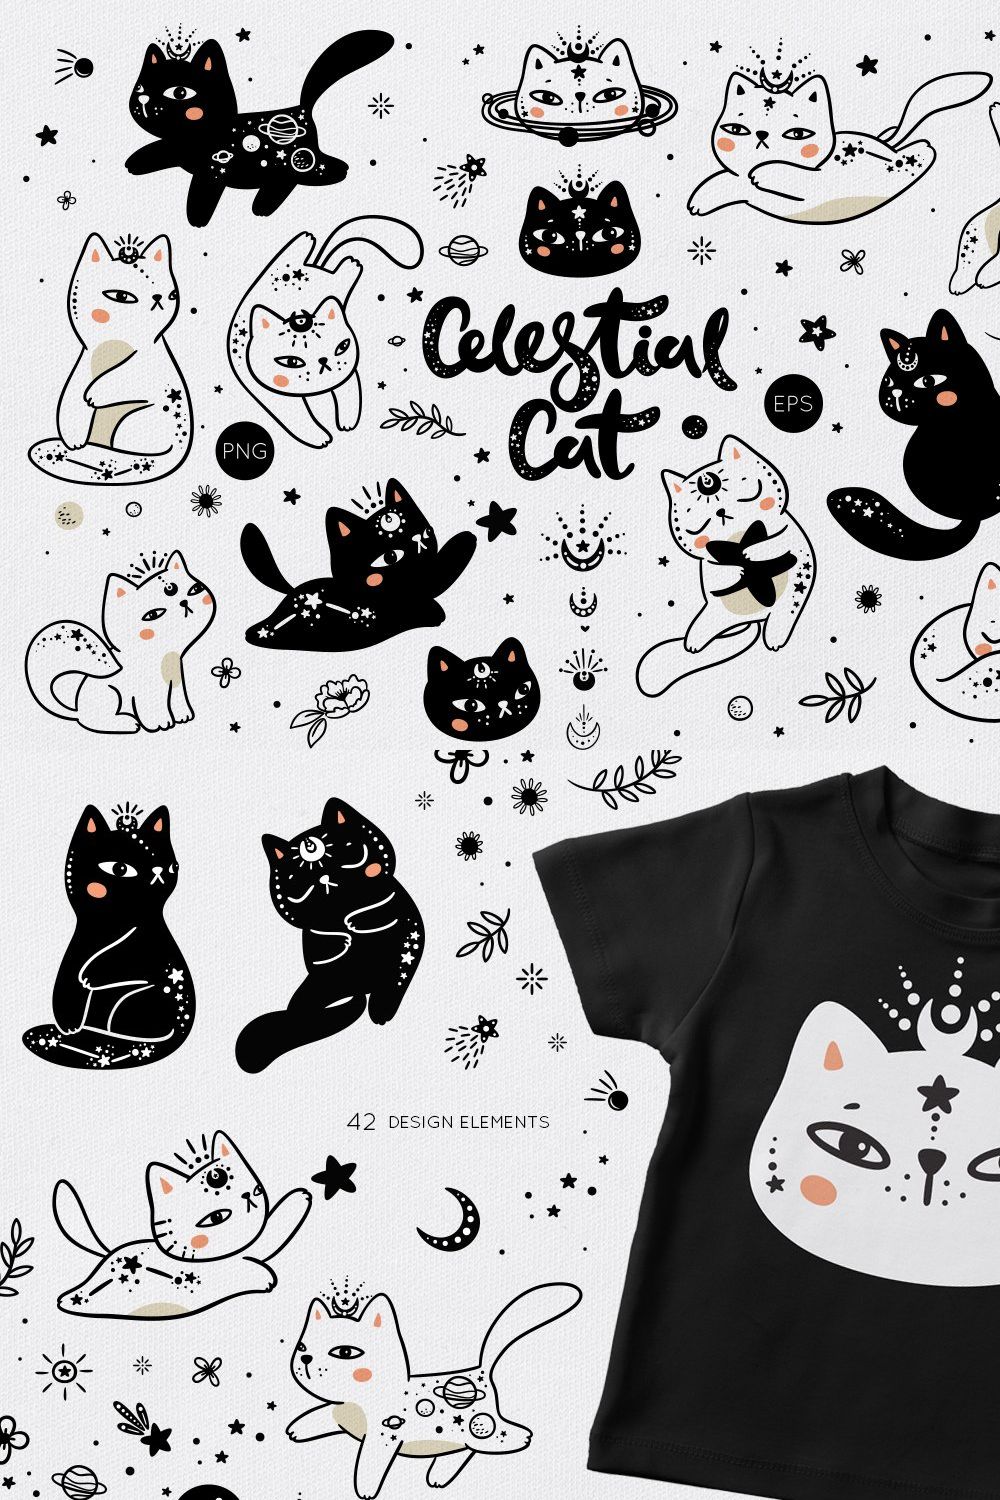 Celestial Cat illustration pinterest preview image.